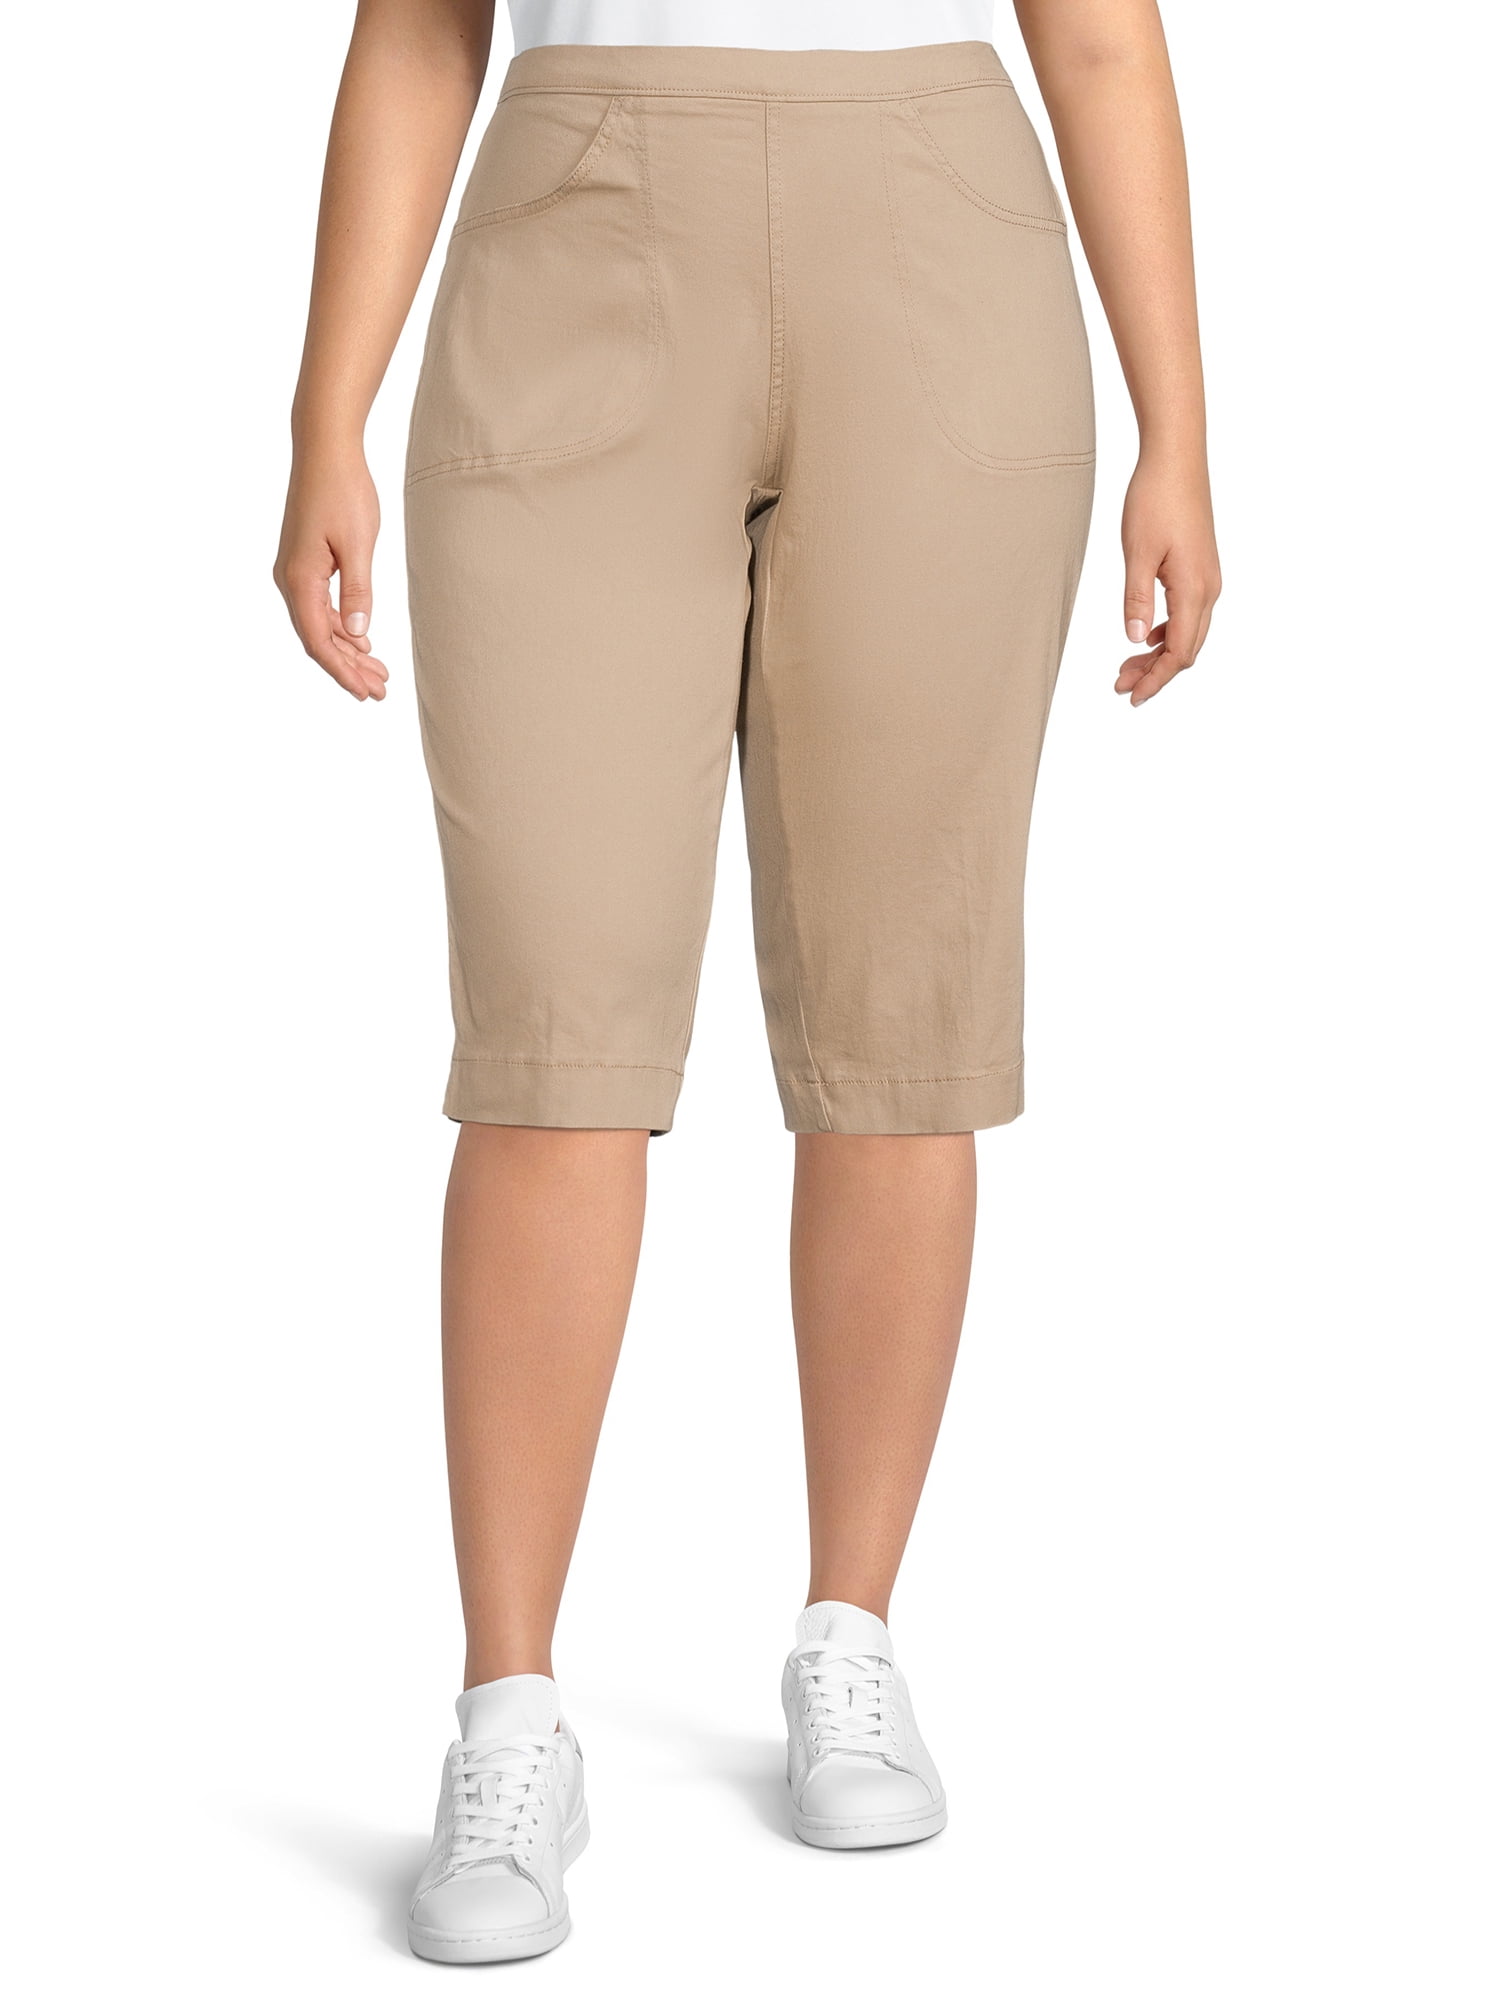 Just My Size Women's Plus Size Size 2 Pocket Pull on Capri Pant